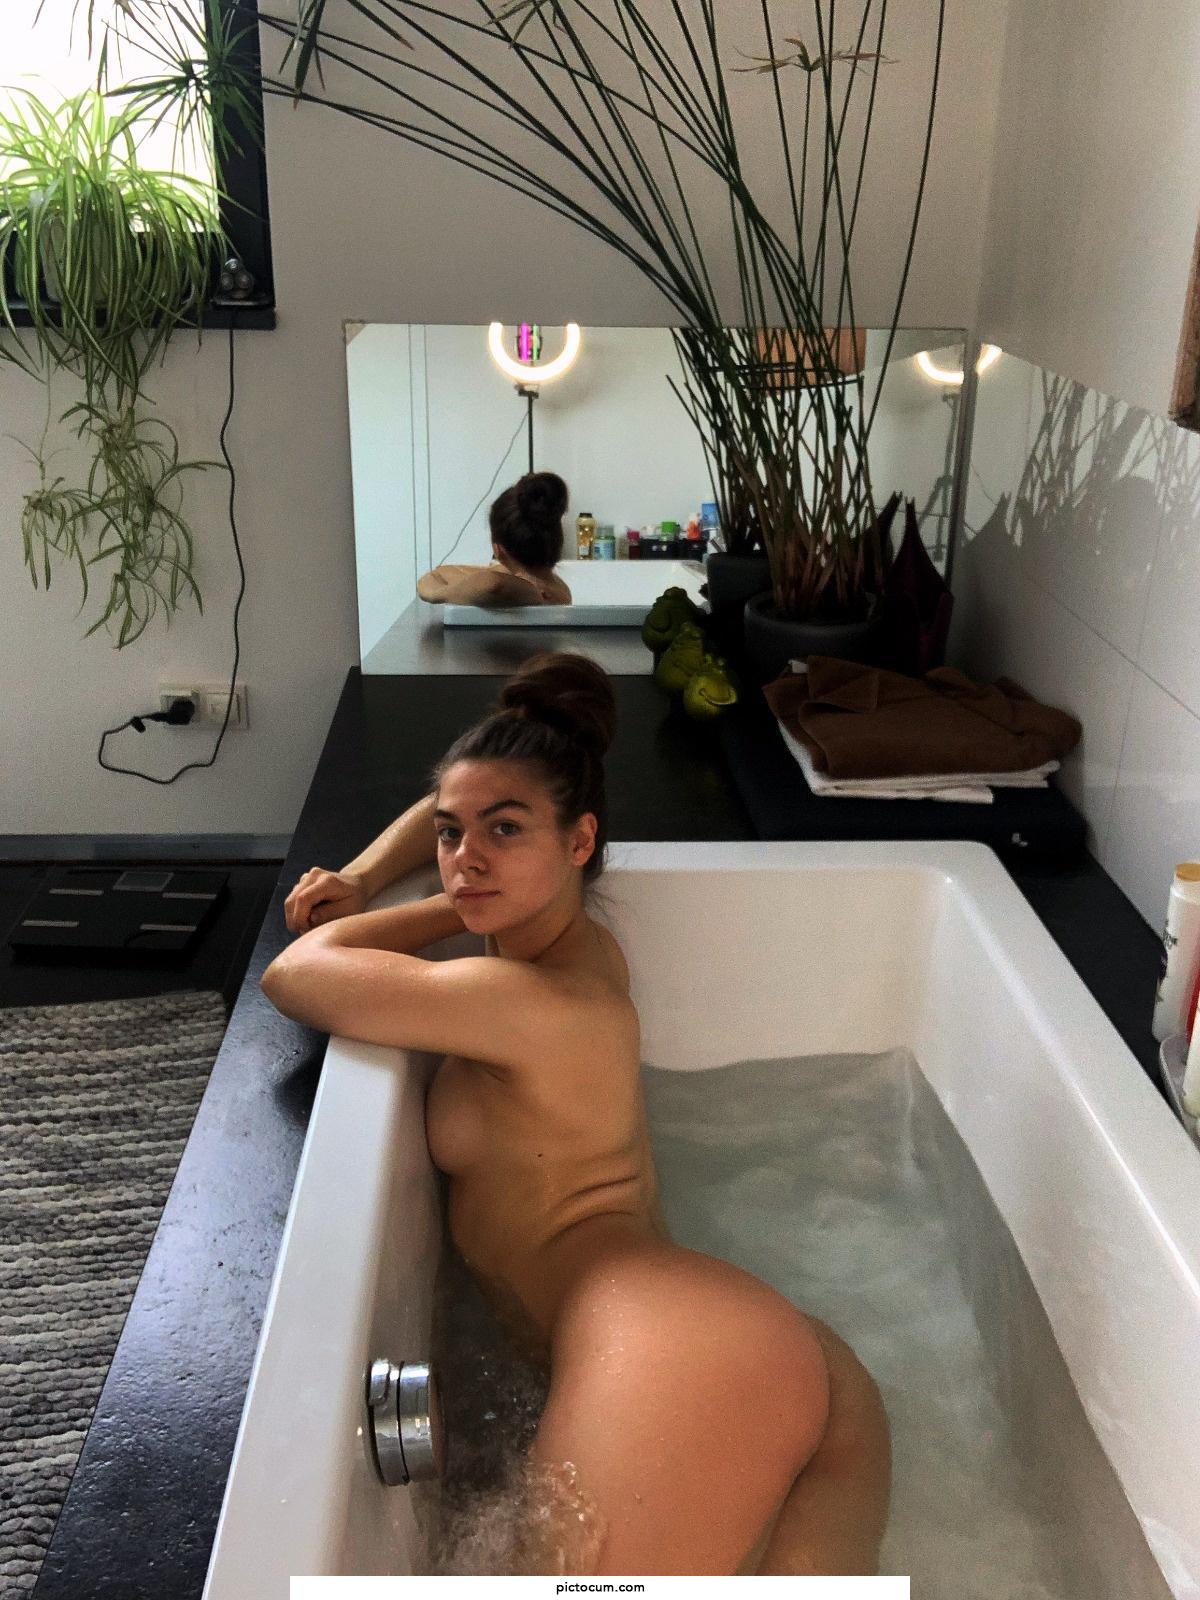 Wanna take a bath with me? 19 y/o